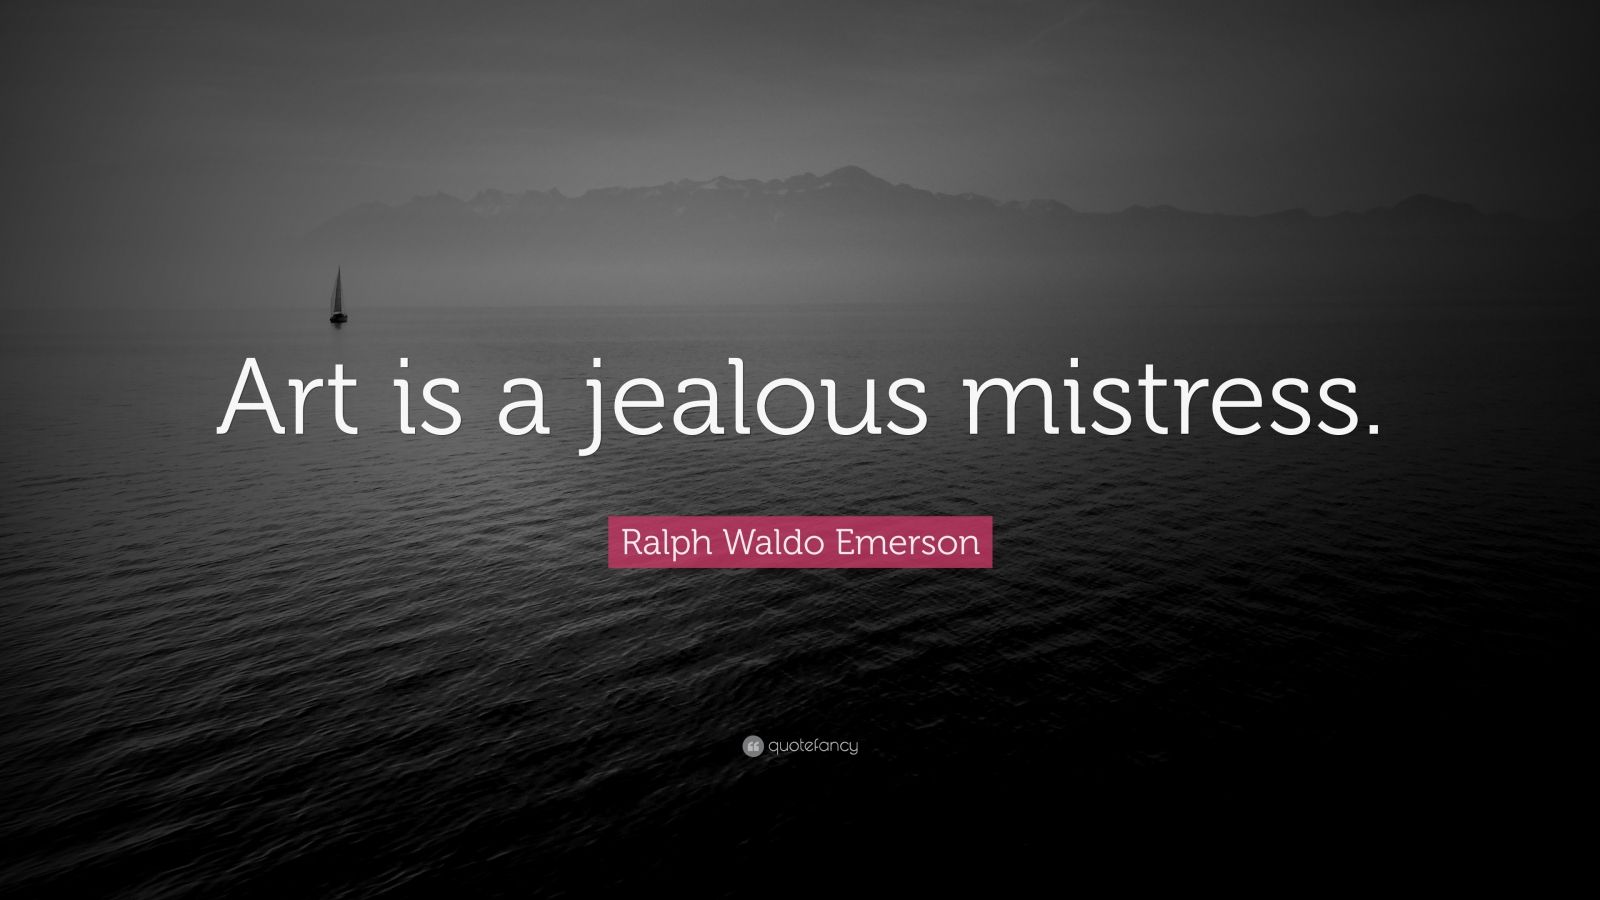 Ralph Waldo Emerson Quote: Art is a jealous mistress (7 wallpapers